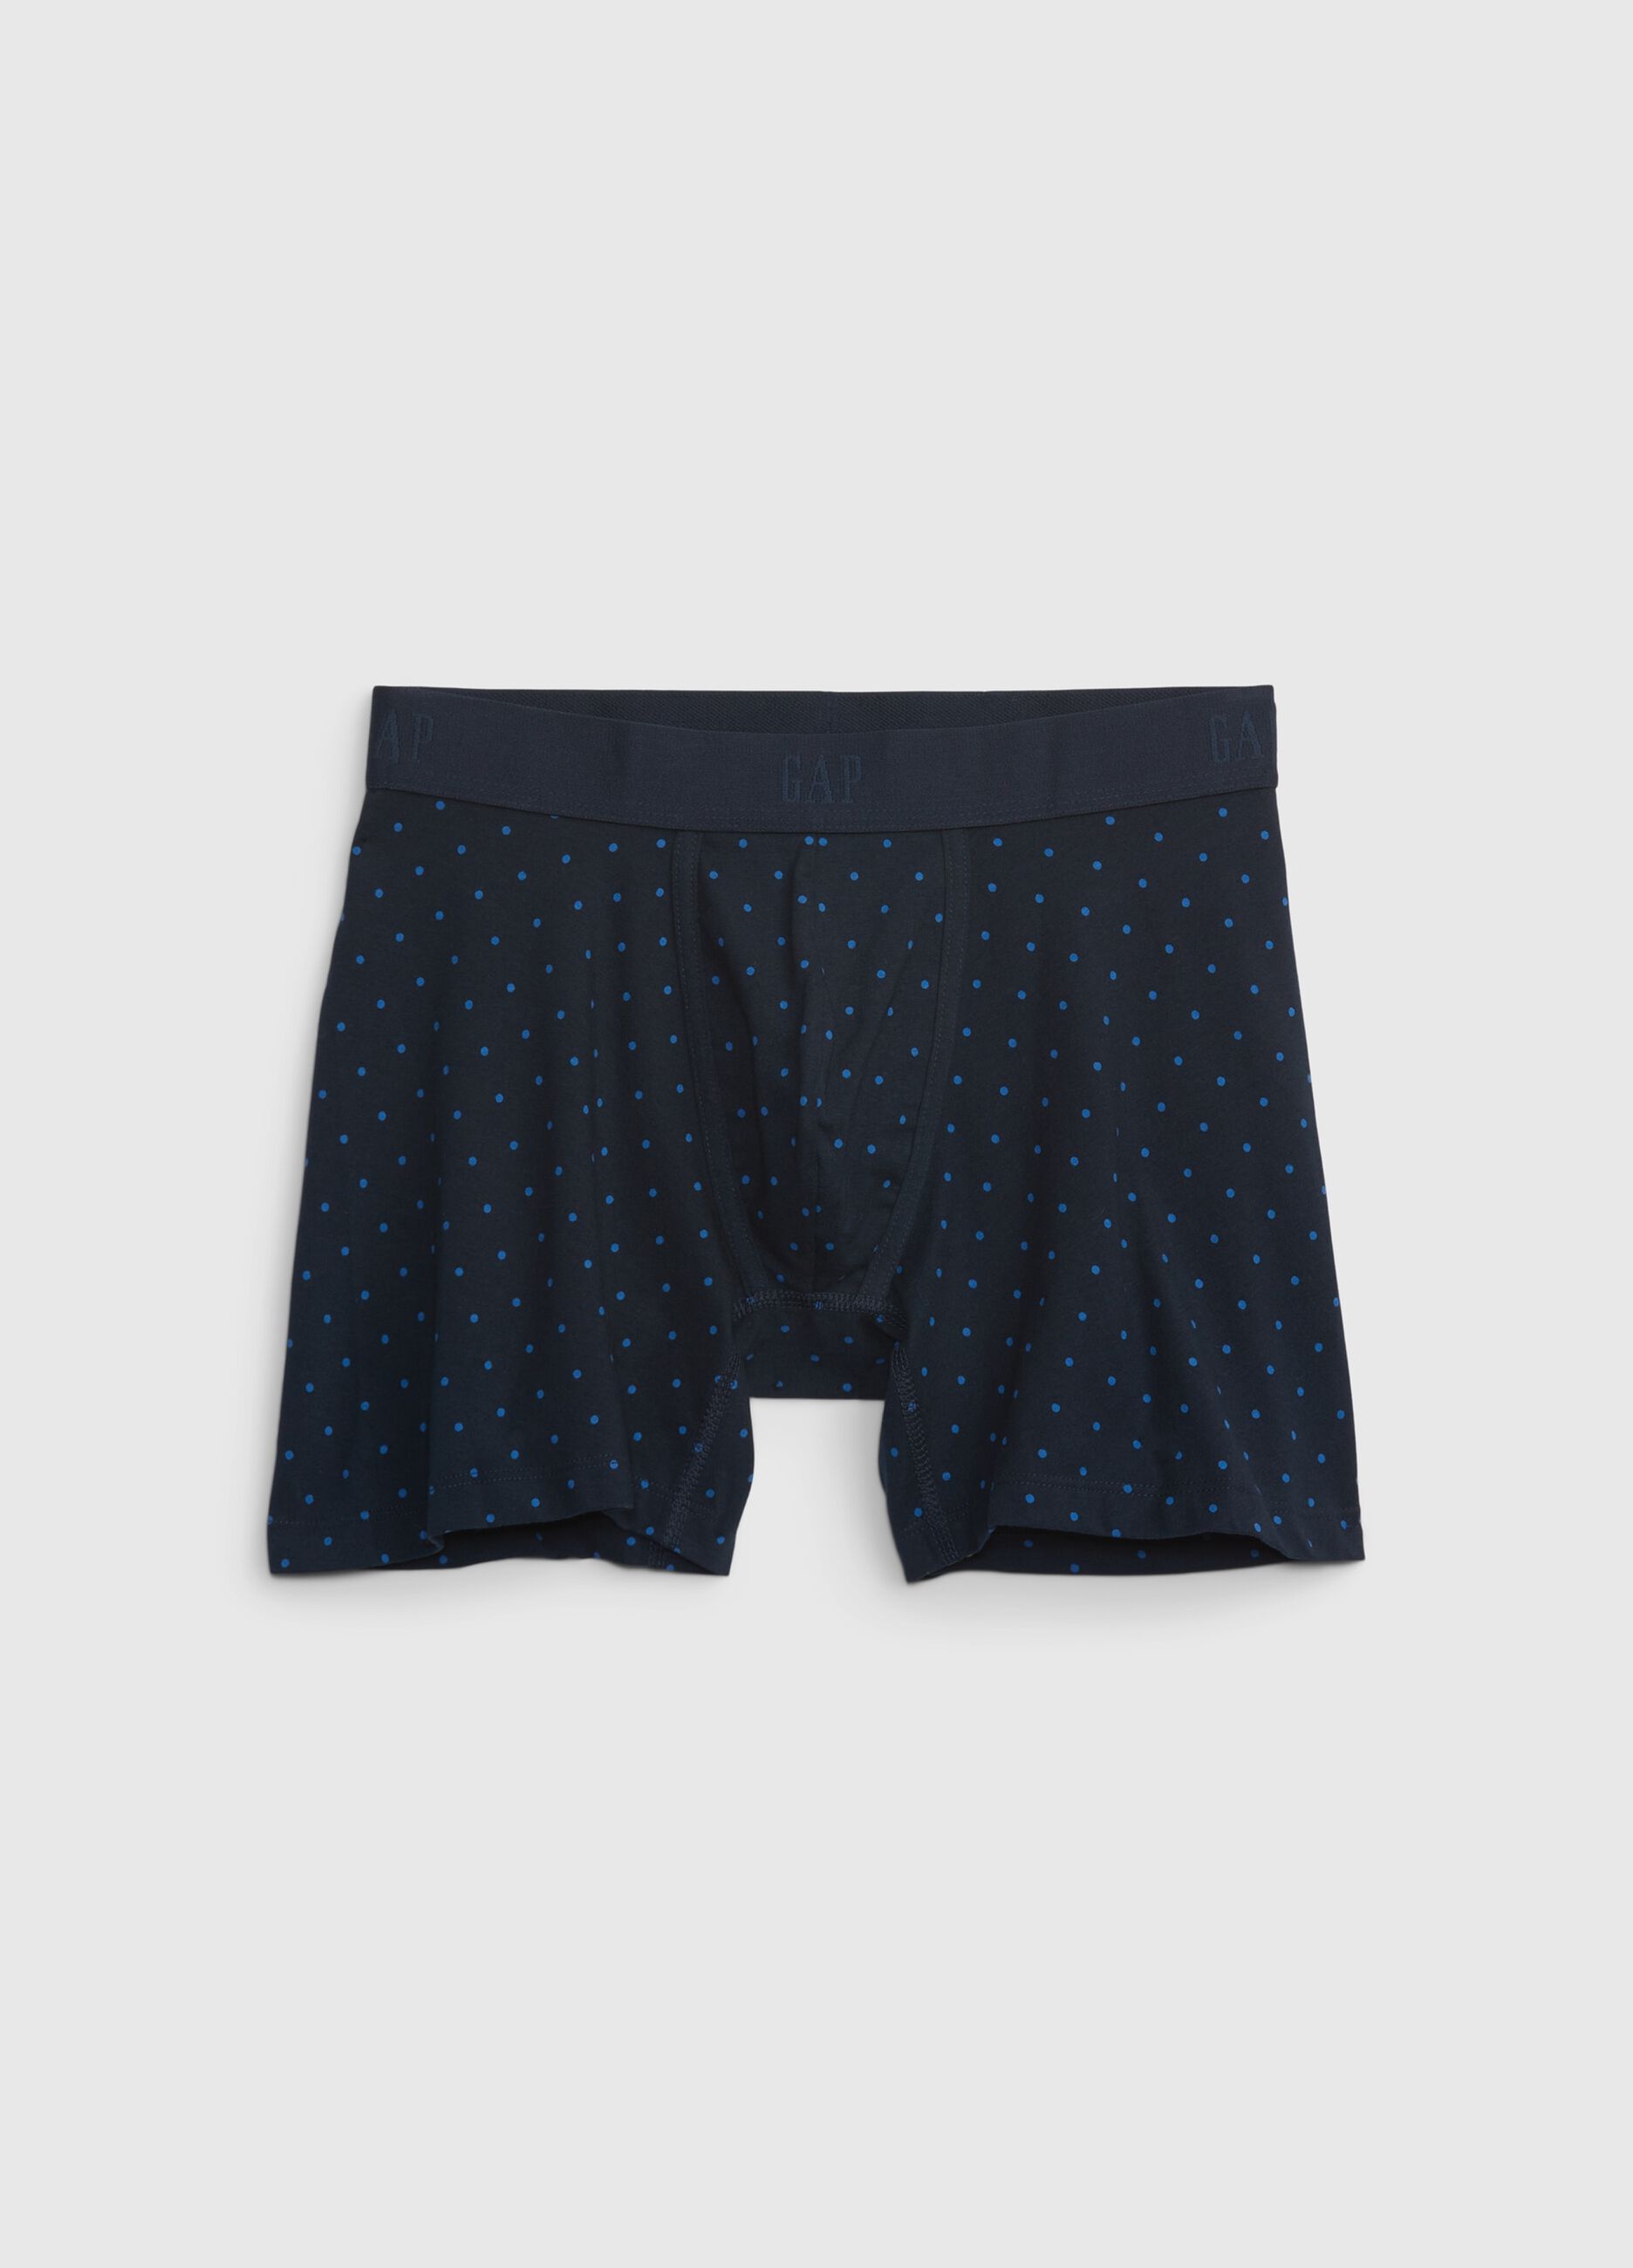 Boxer shorts with polka dot pattern